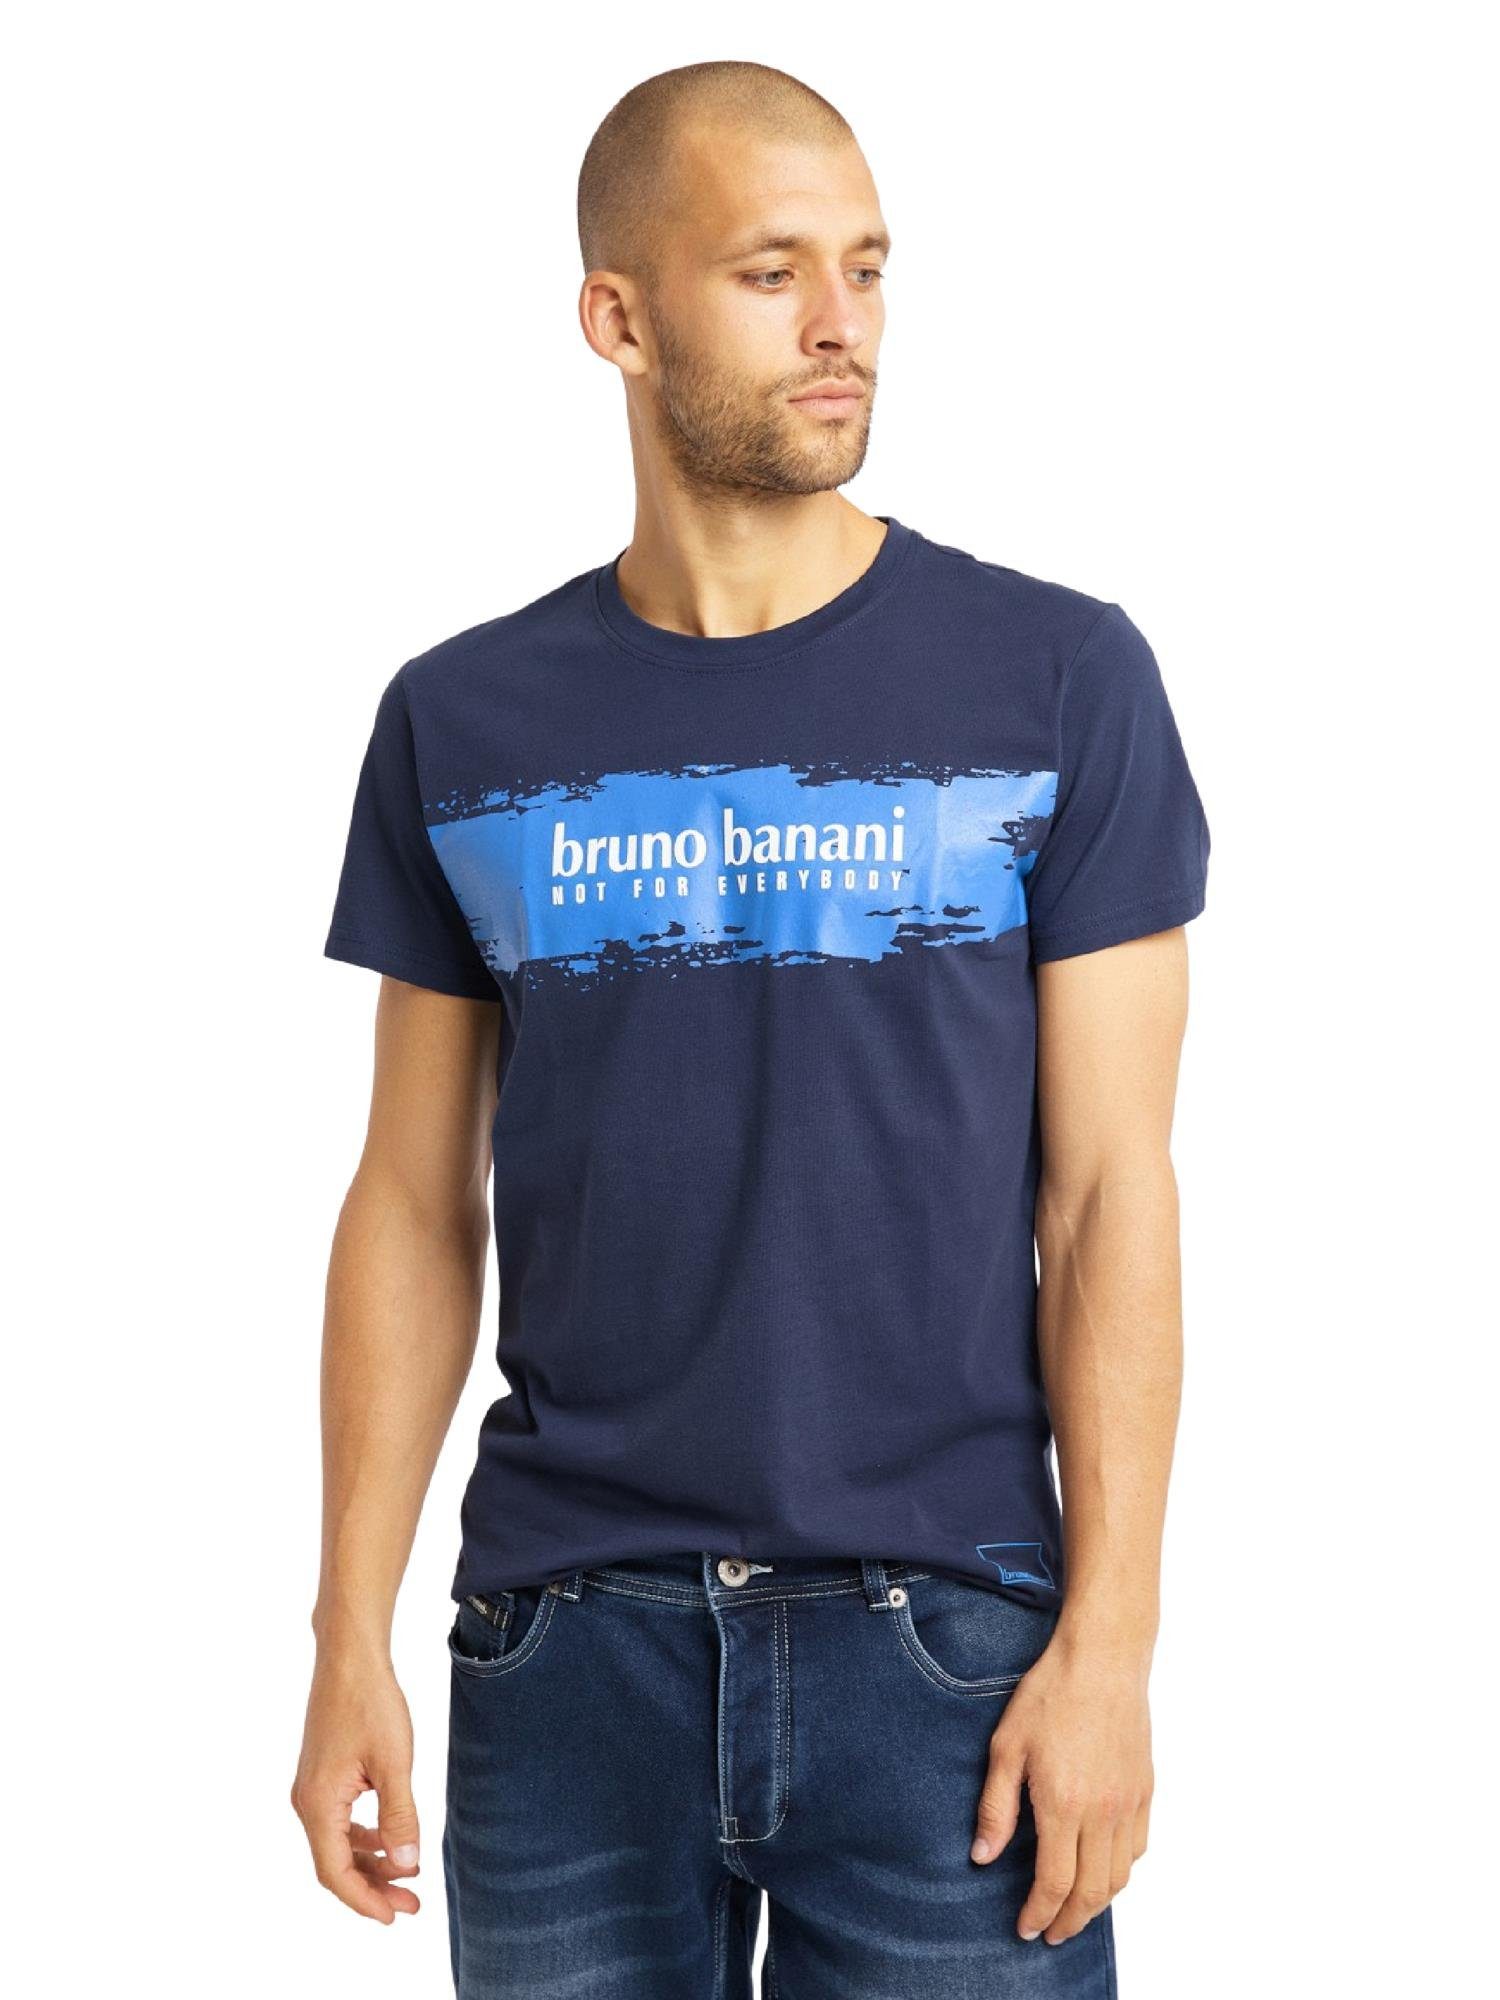 Bruno SHAW Banani T-Shirt